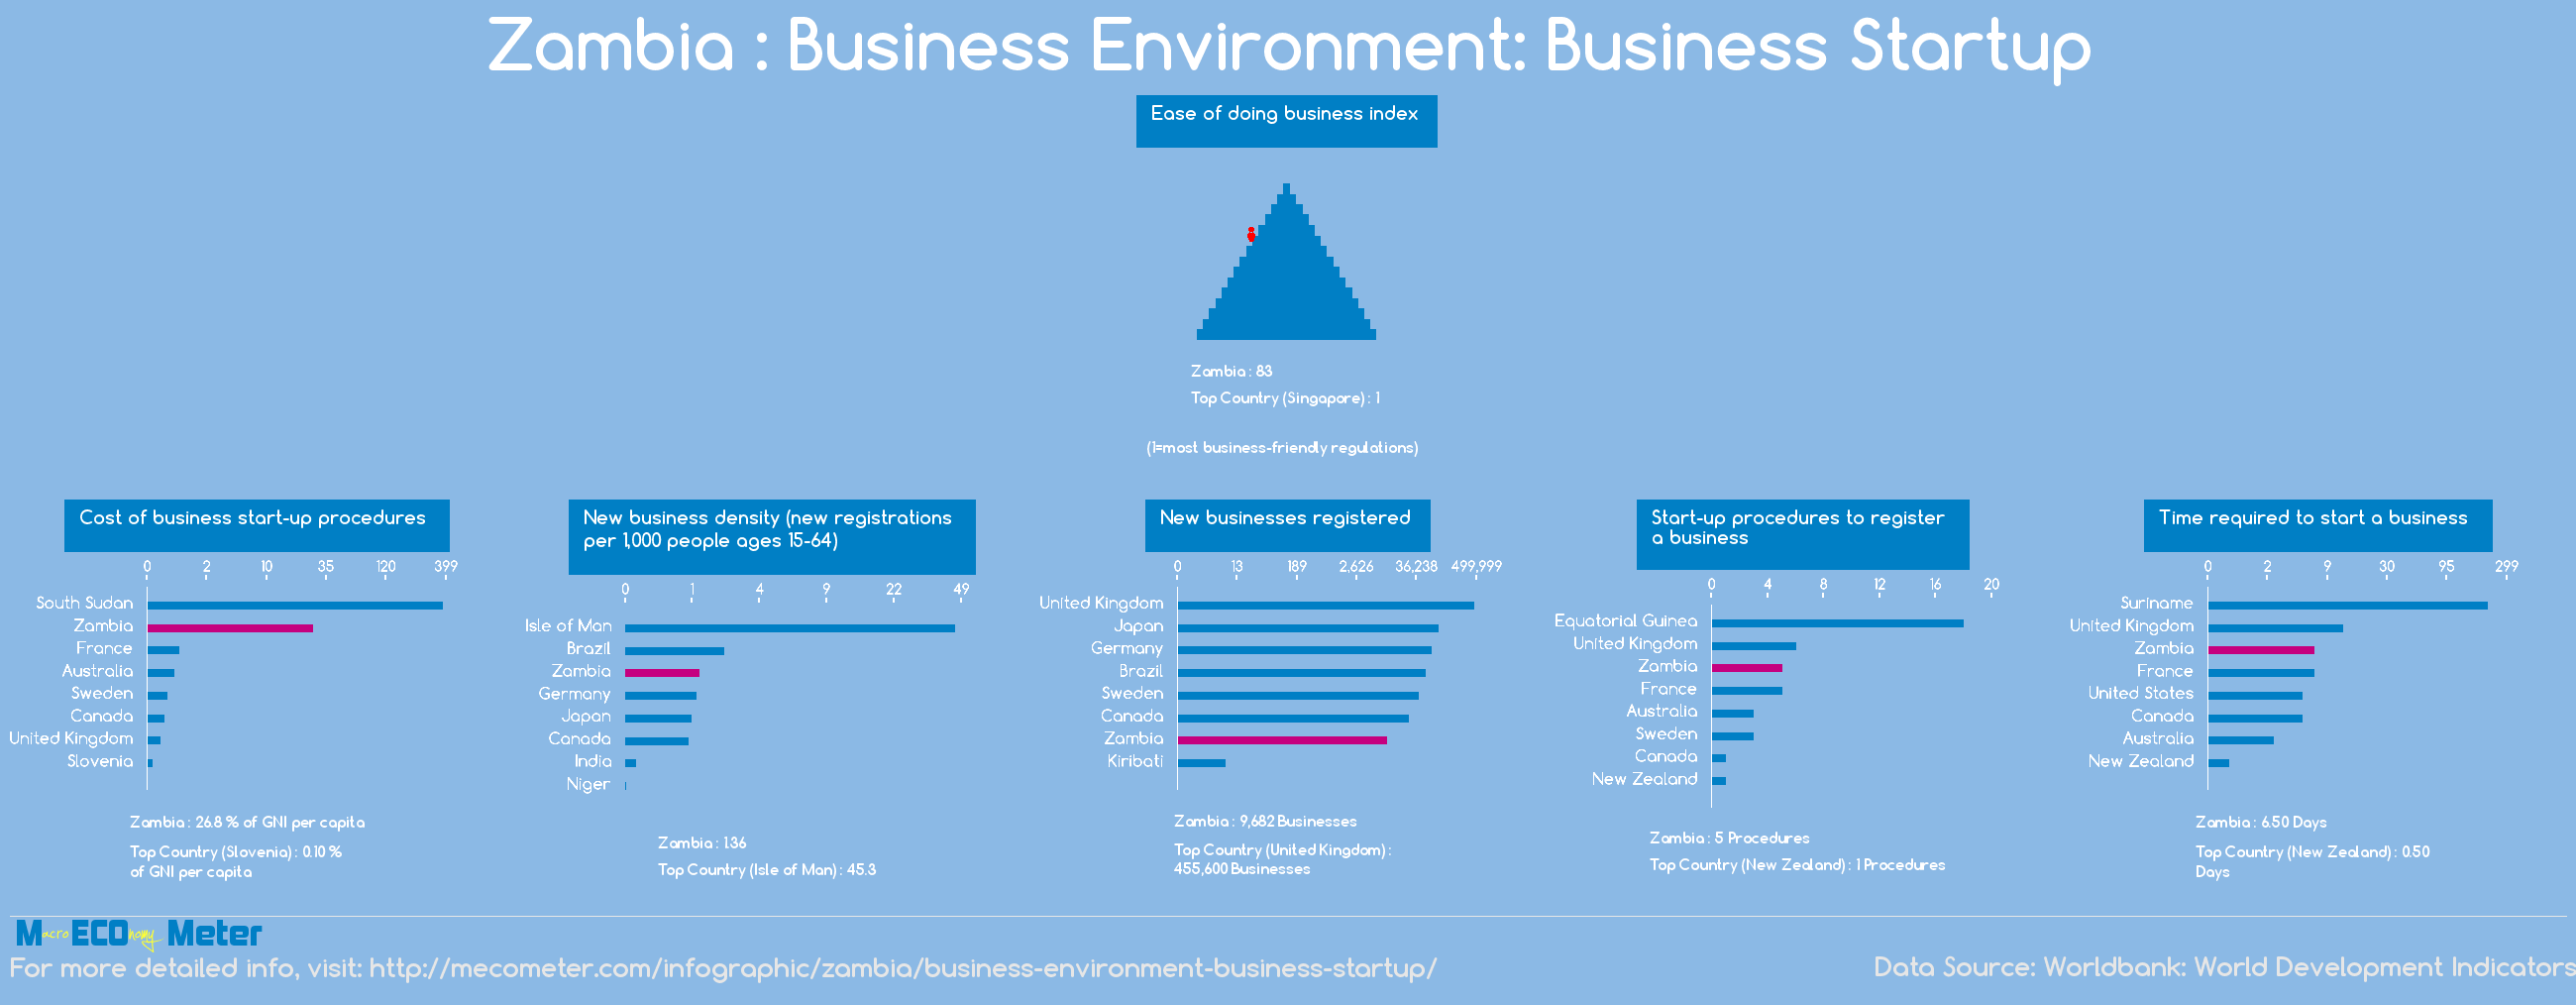 Zambia : Business Environment: Business Startup